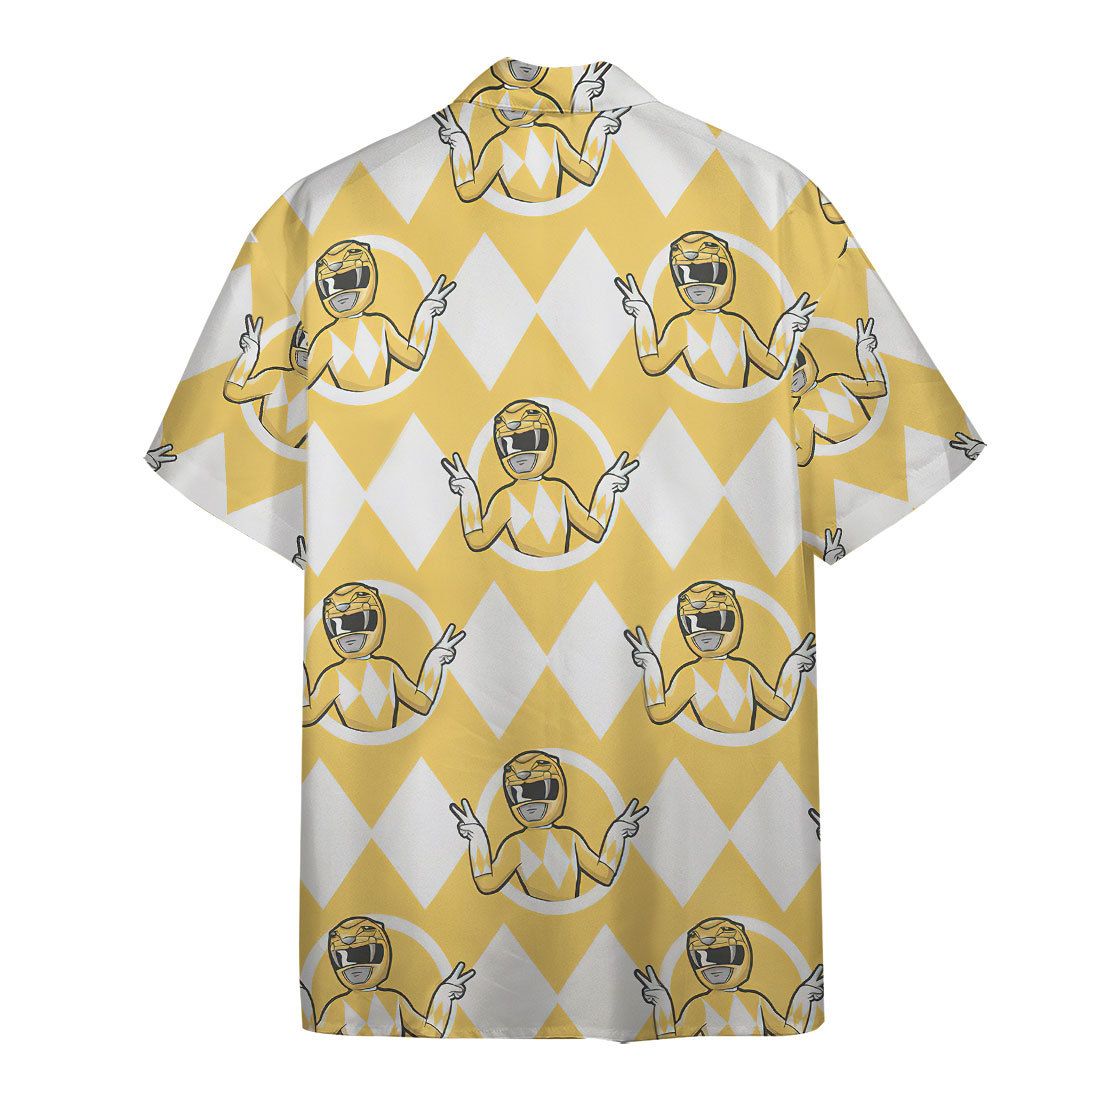 Mighty Morphin Power Rangers Yellow Ranger Hawaii Shirt 1